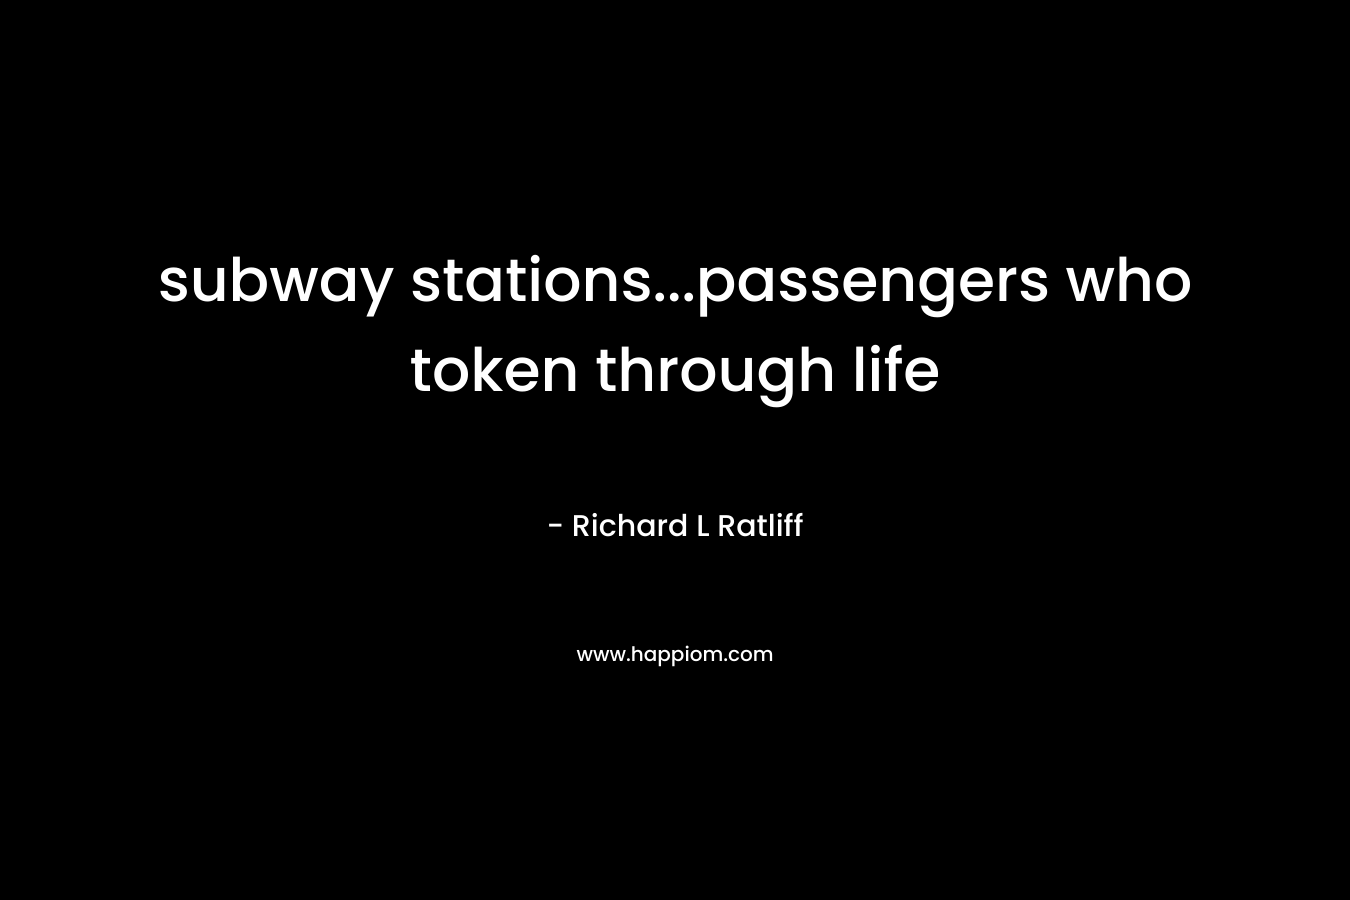 subway stations...passengers who token through life